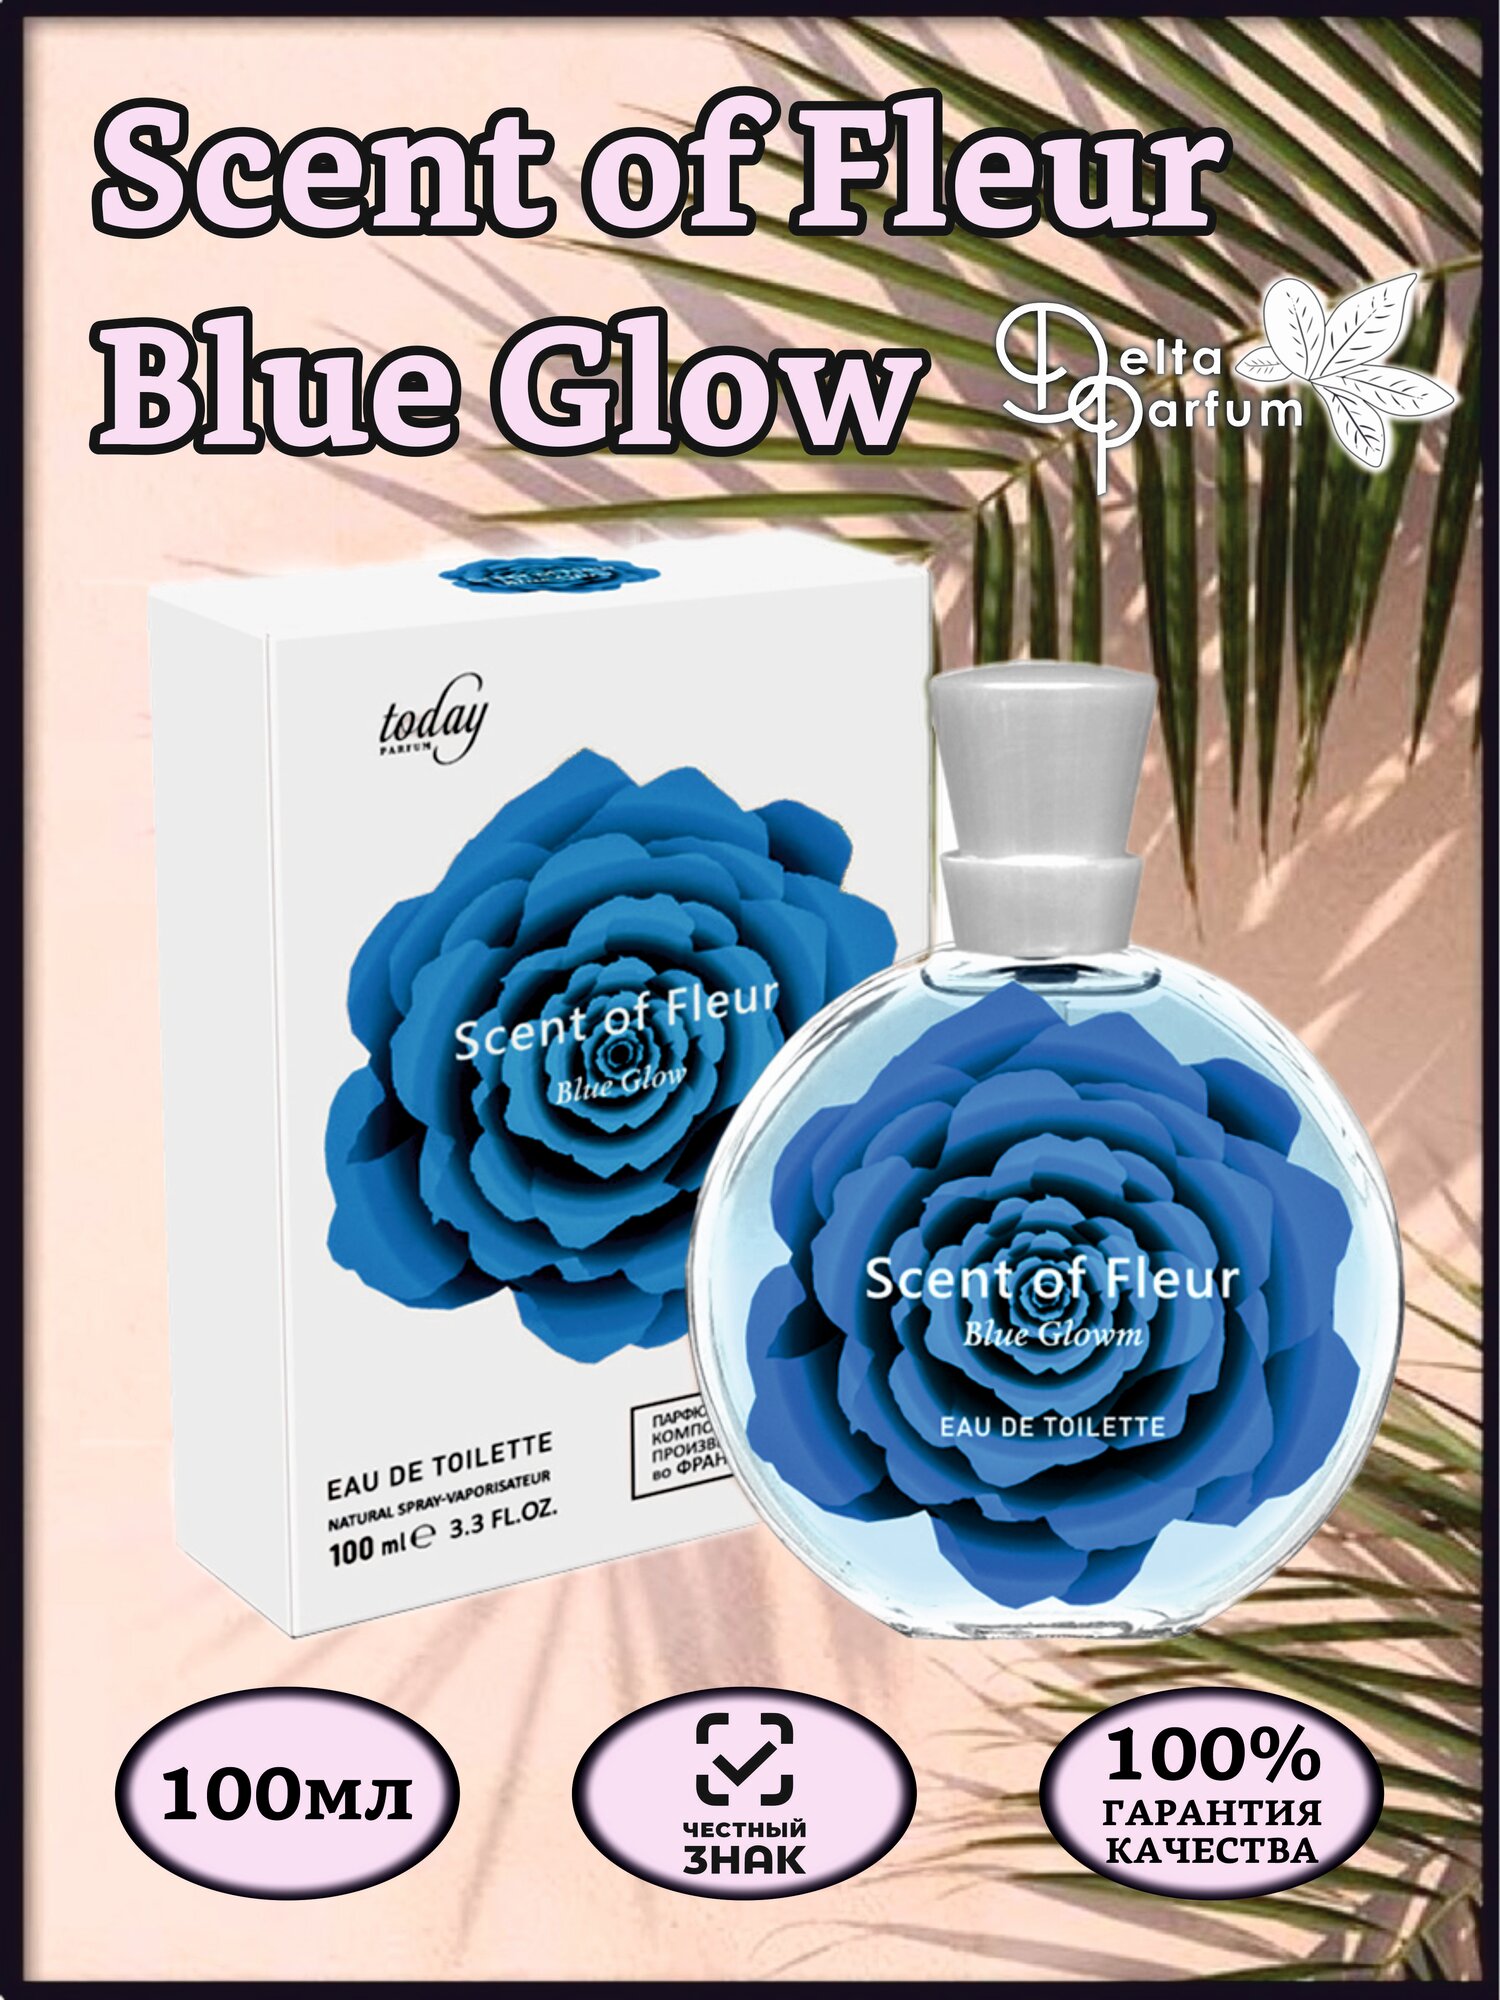 TODAY PARFUM (Delta parfum) Туалетная вода женская SCENT OF FLEUR BLUE GLOW